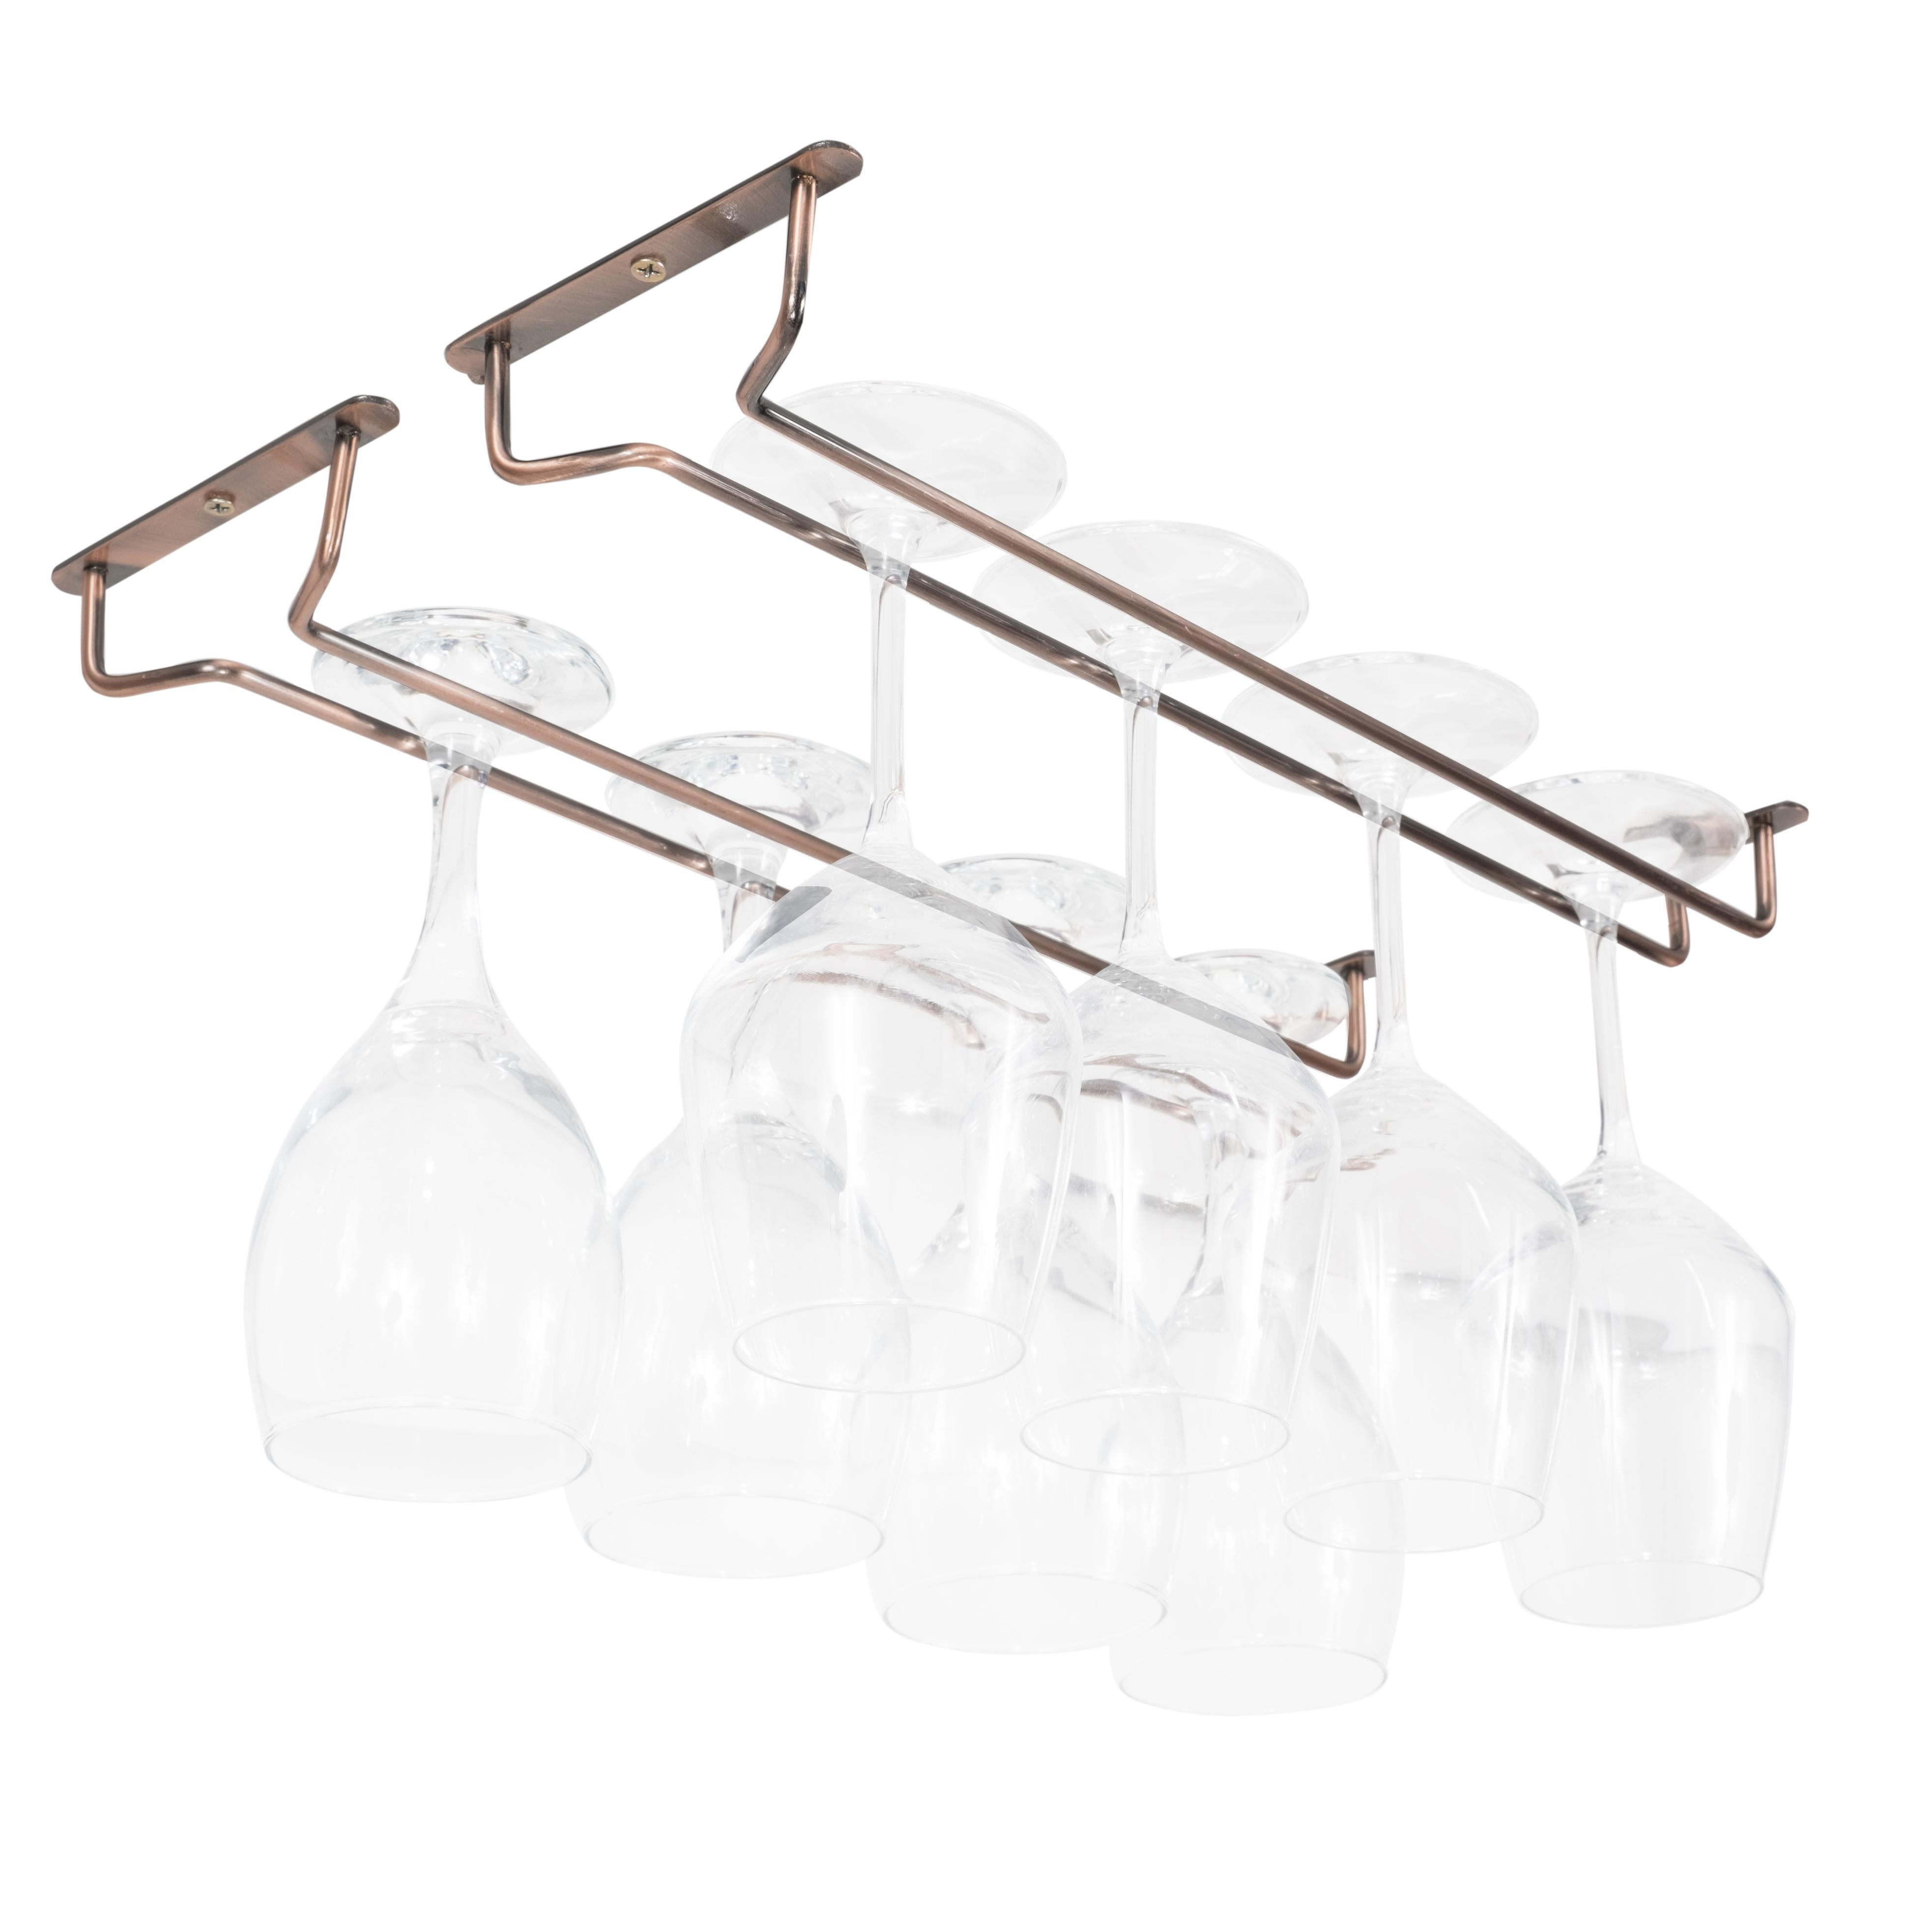 13 inch Chrome Glass Hanger Wine Glass Cup Holder Storage Rack Bar Hanging Shelf 